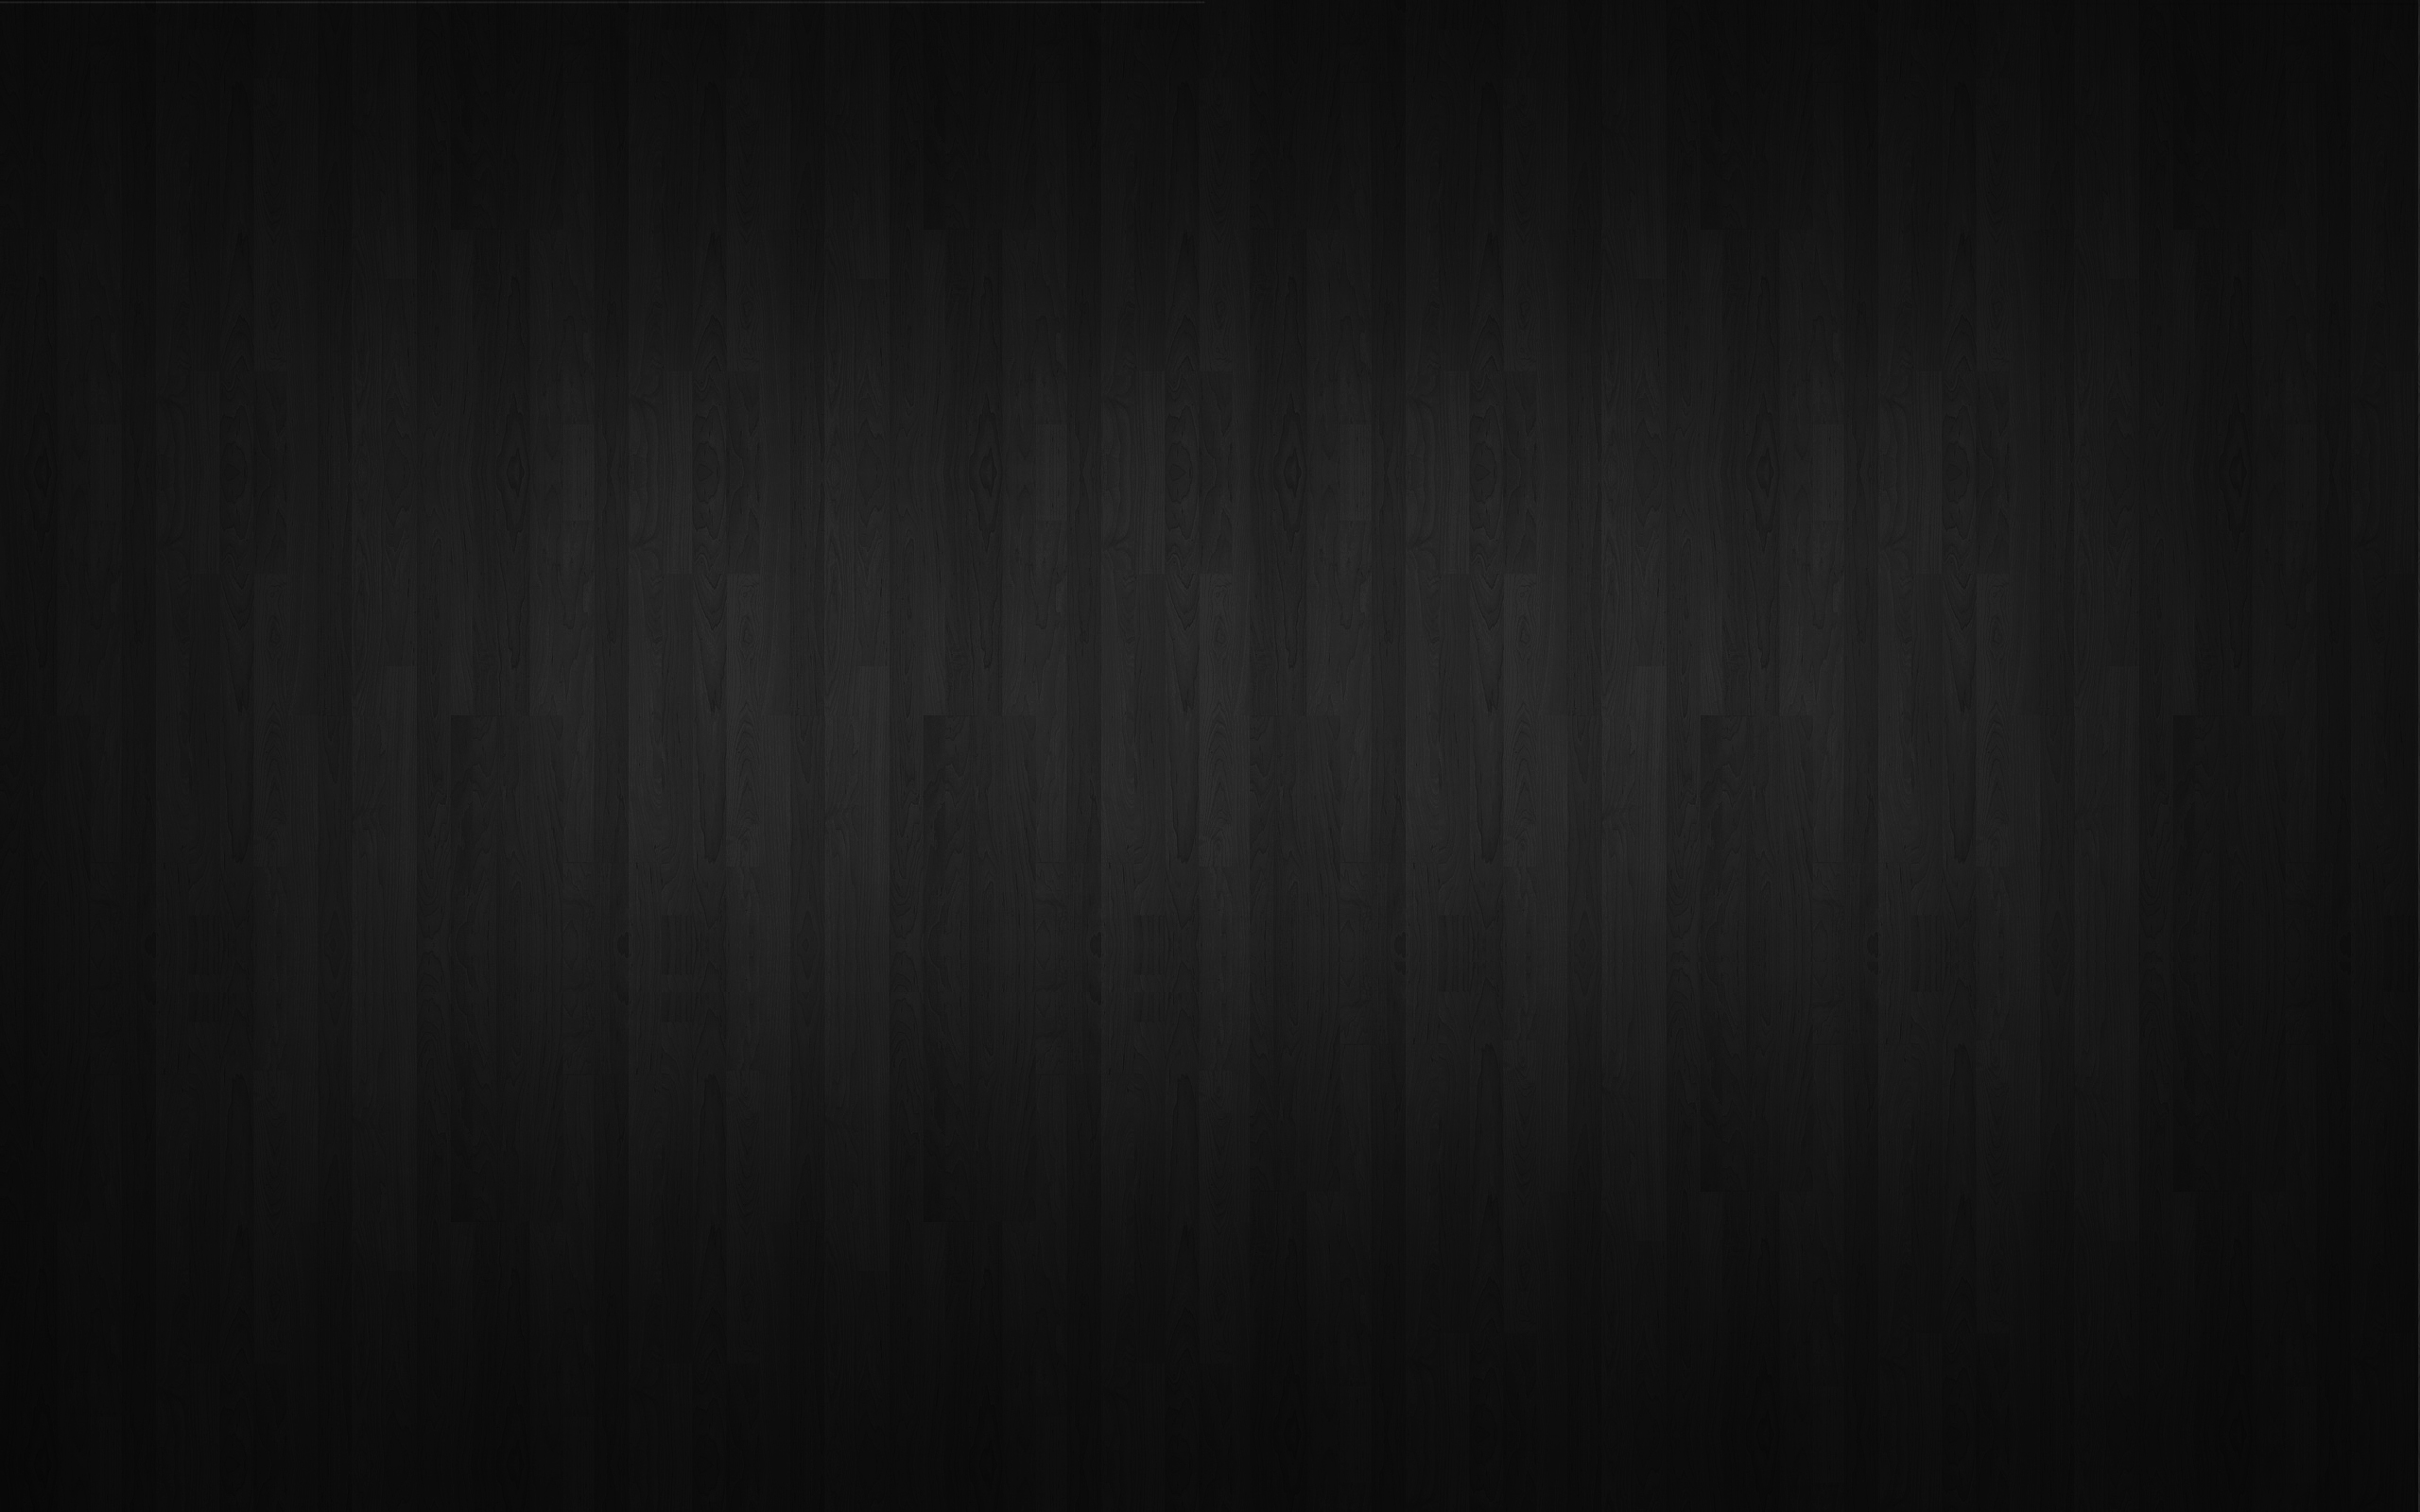 4K Black Wallpaper Texture for Background Stock Photo  Image of wallpaper  black 164565880